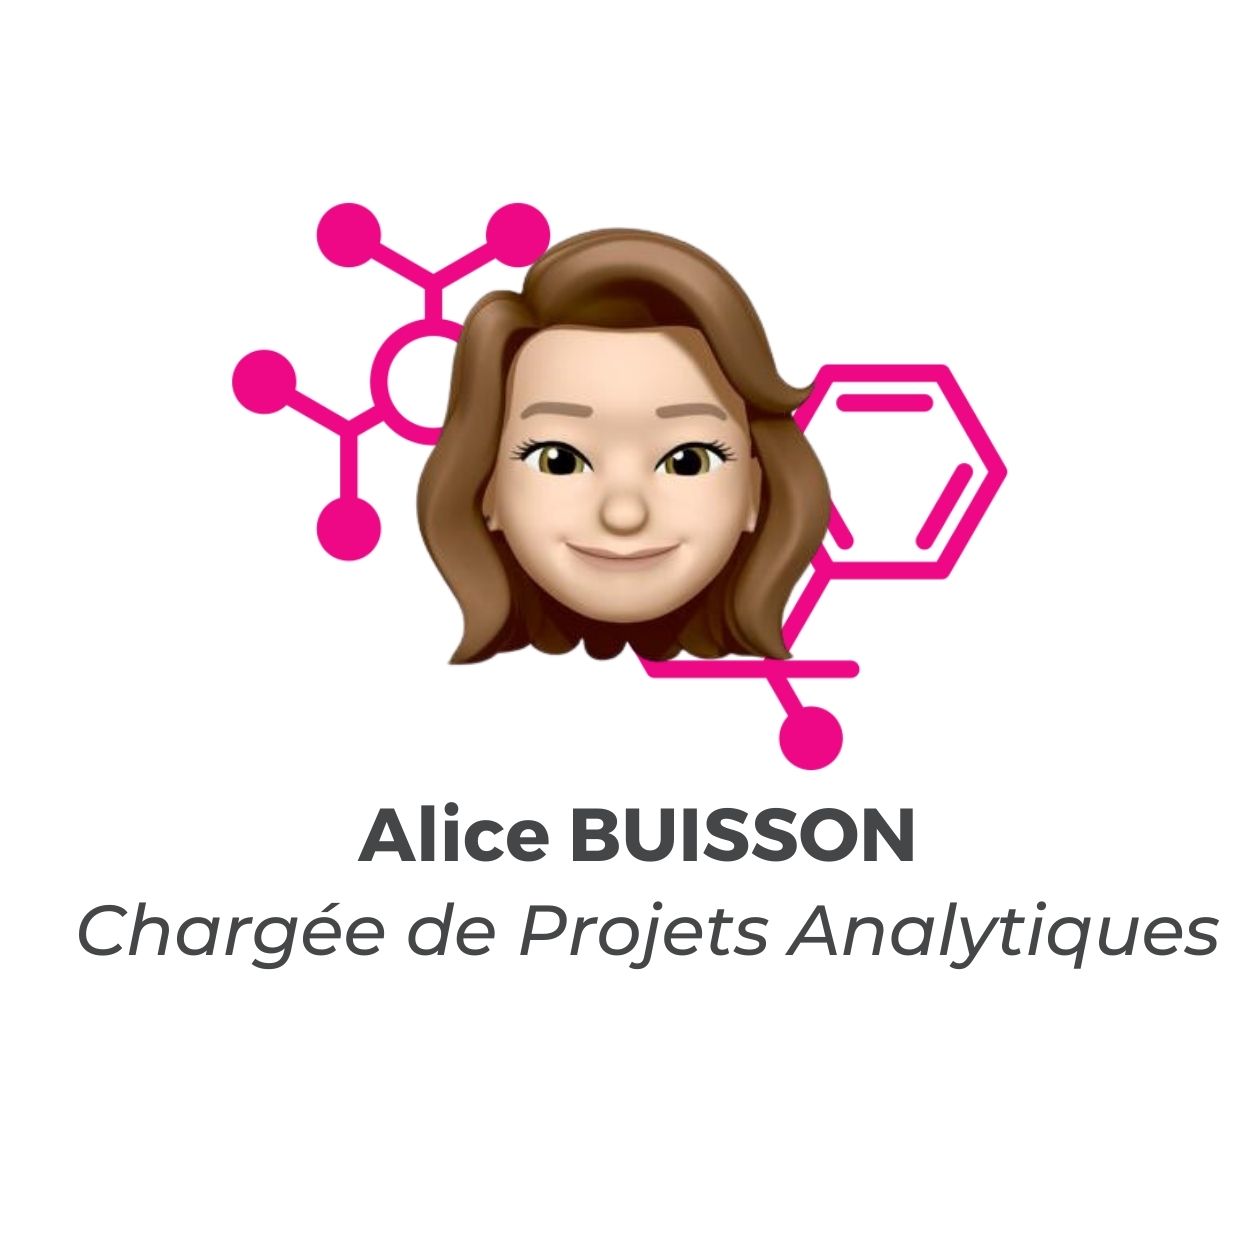 Alice Buisson